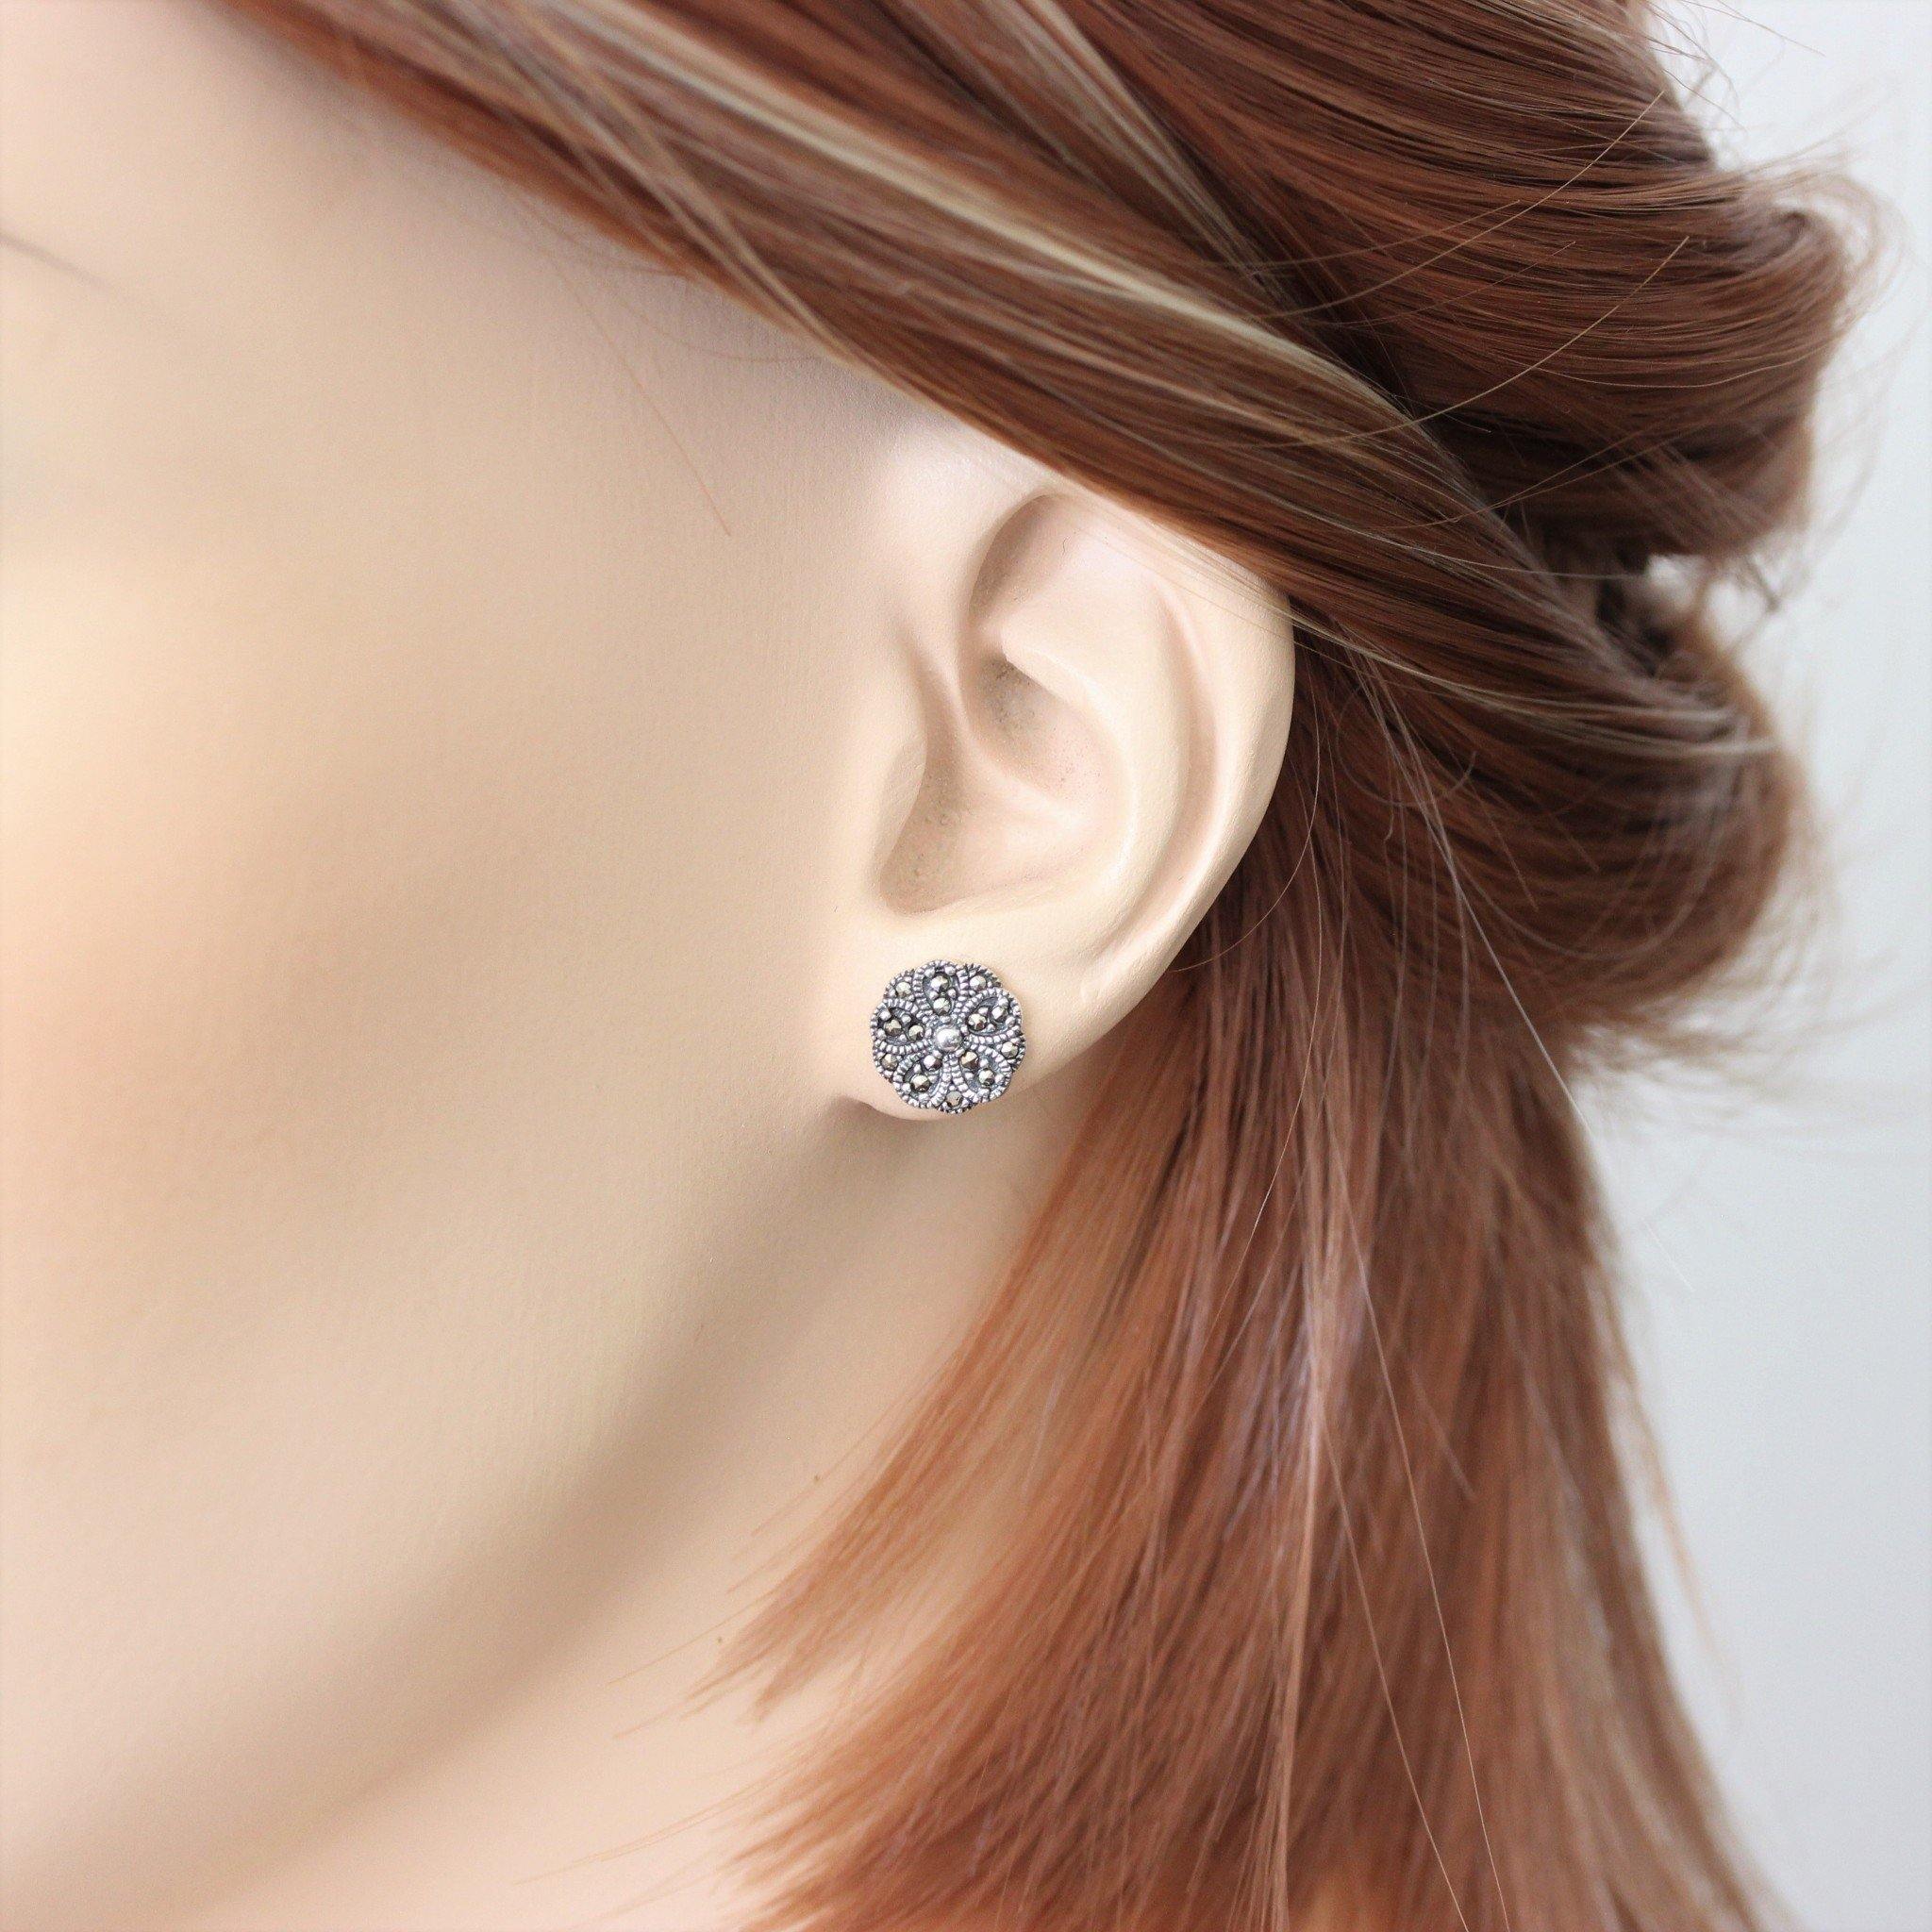 Sterling Silver Marcasite 10mm Round Vintage Inspired Flower Stud Earrings - STERLING SILVER DESIGNS